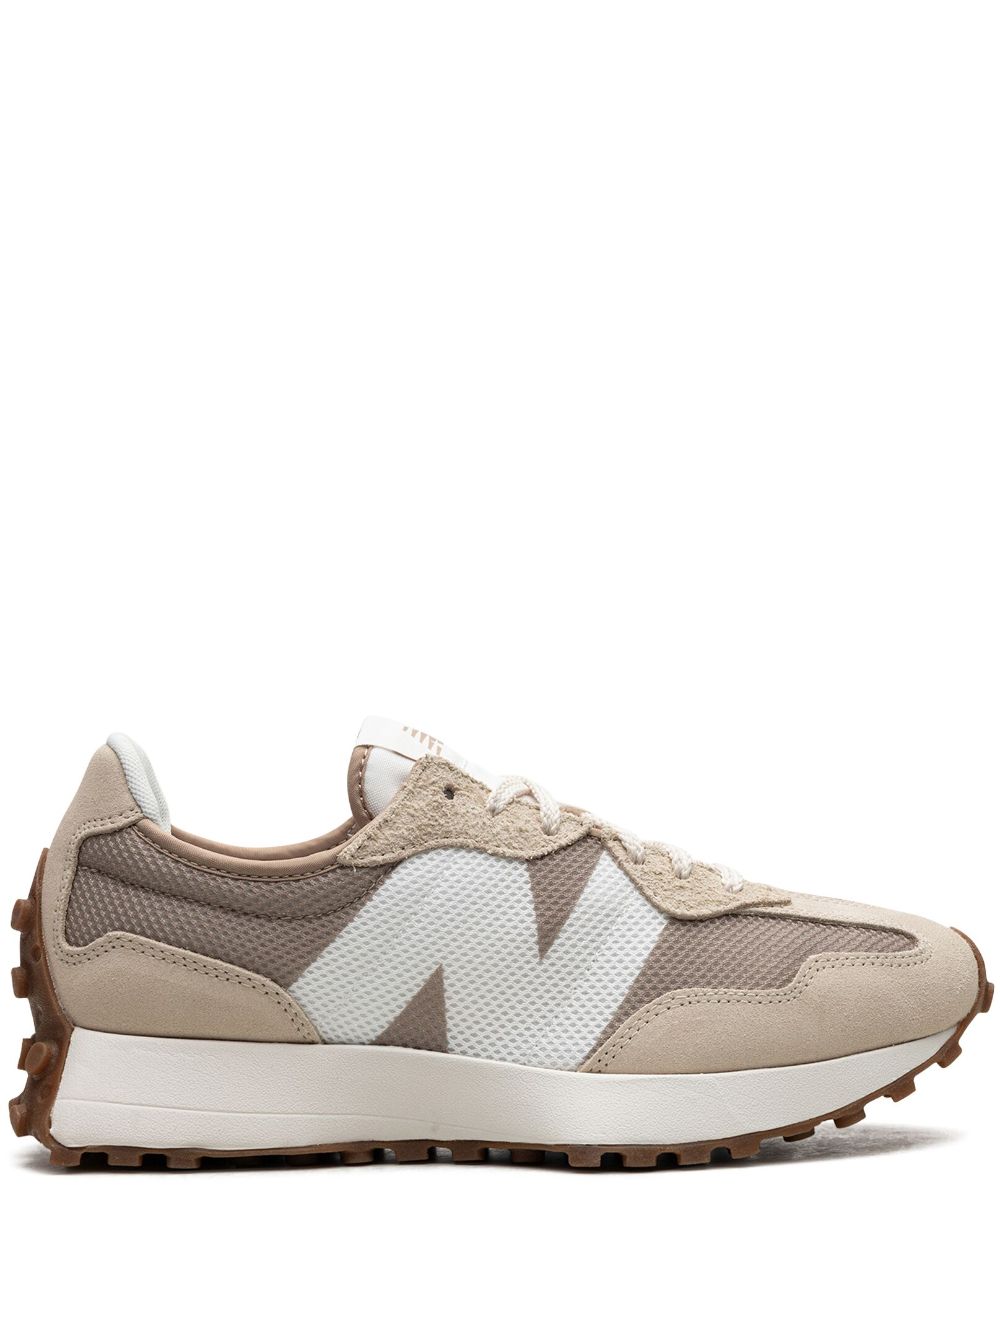 New Balance 327 "Bone Mindful Grey" sneakers - Neutrals